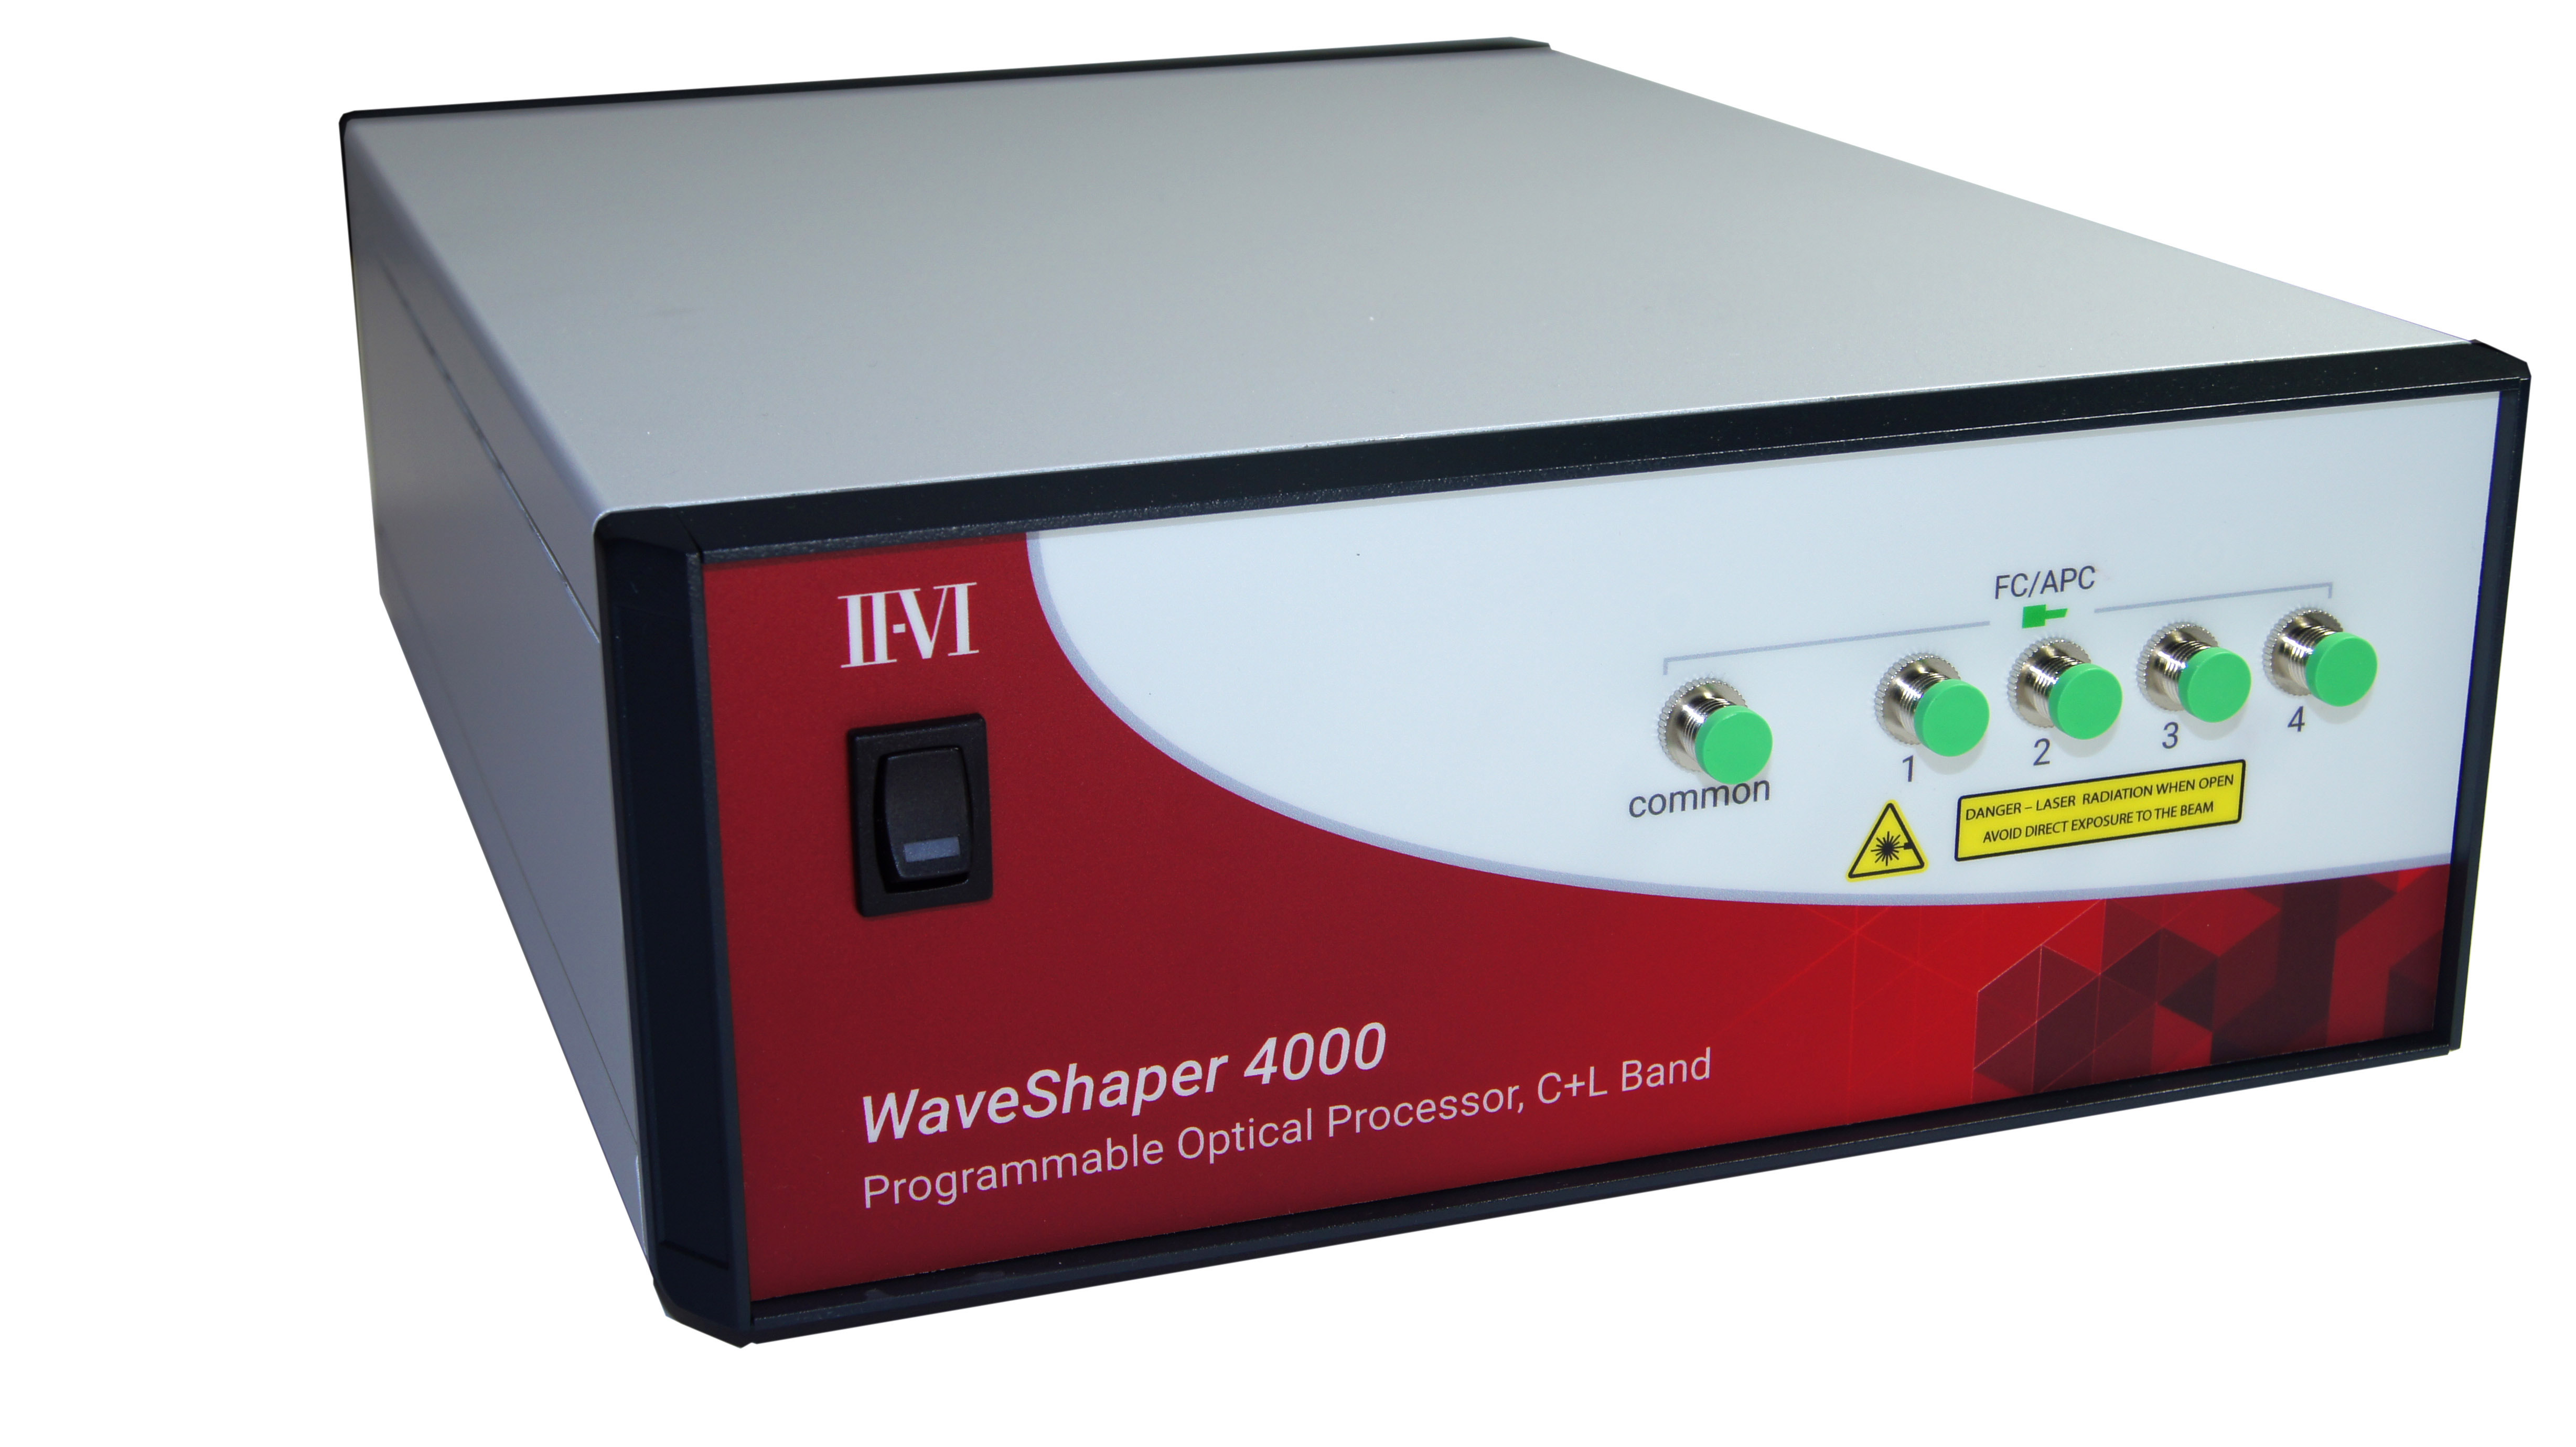 WaveShaper 4000